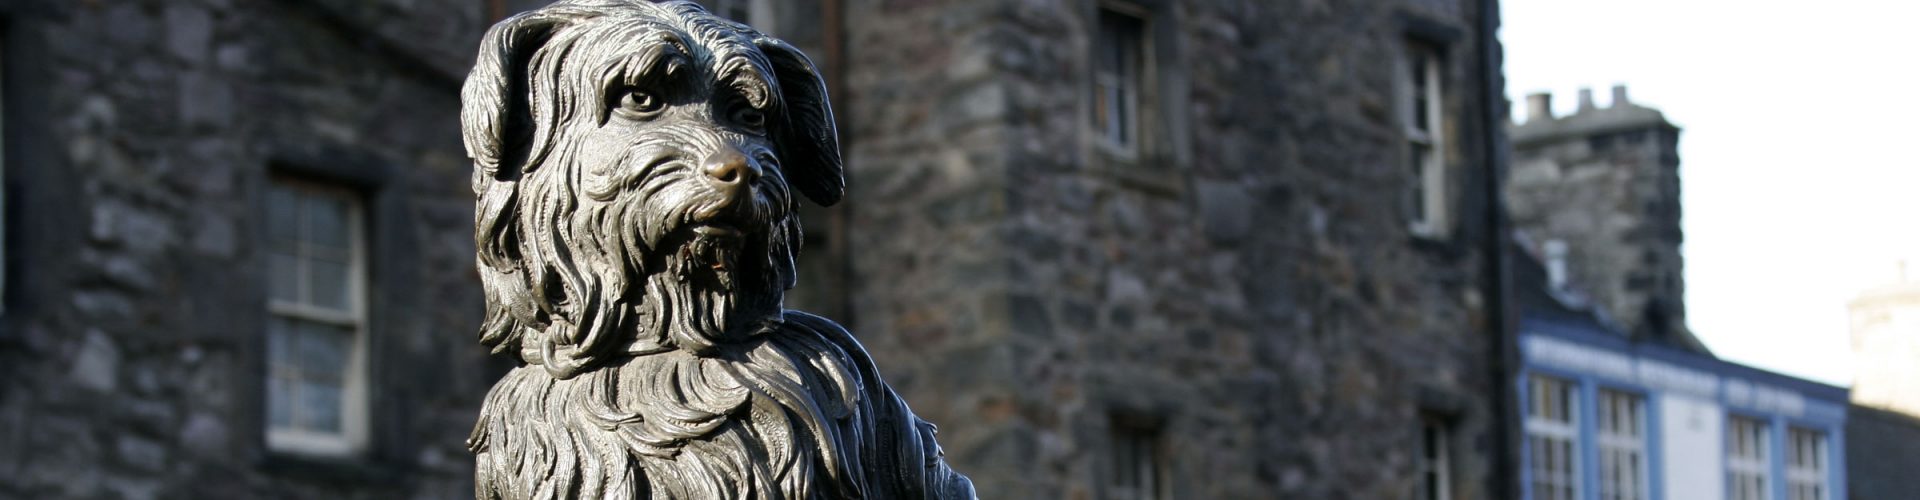 The statue of Greyfriars Bobby in Edinburgh